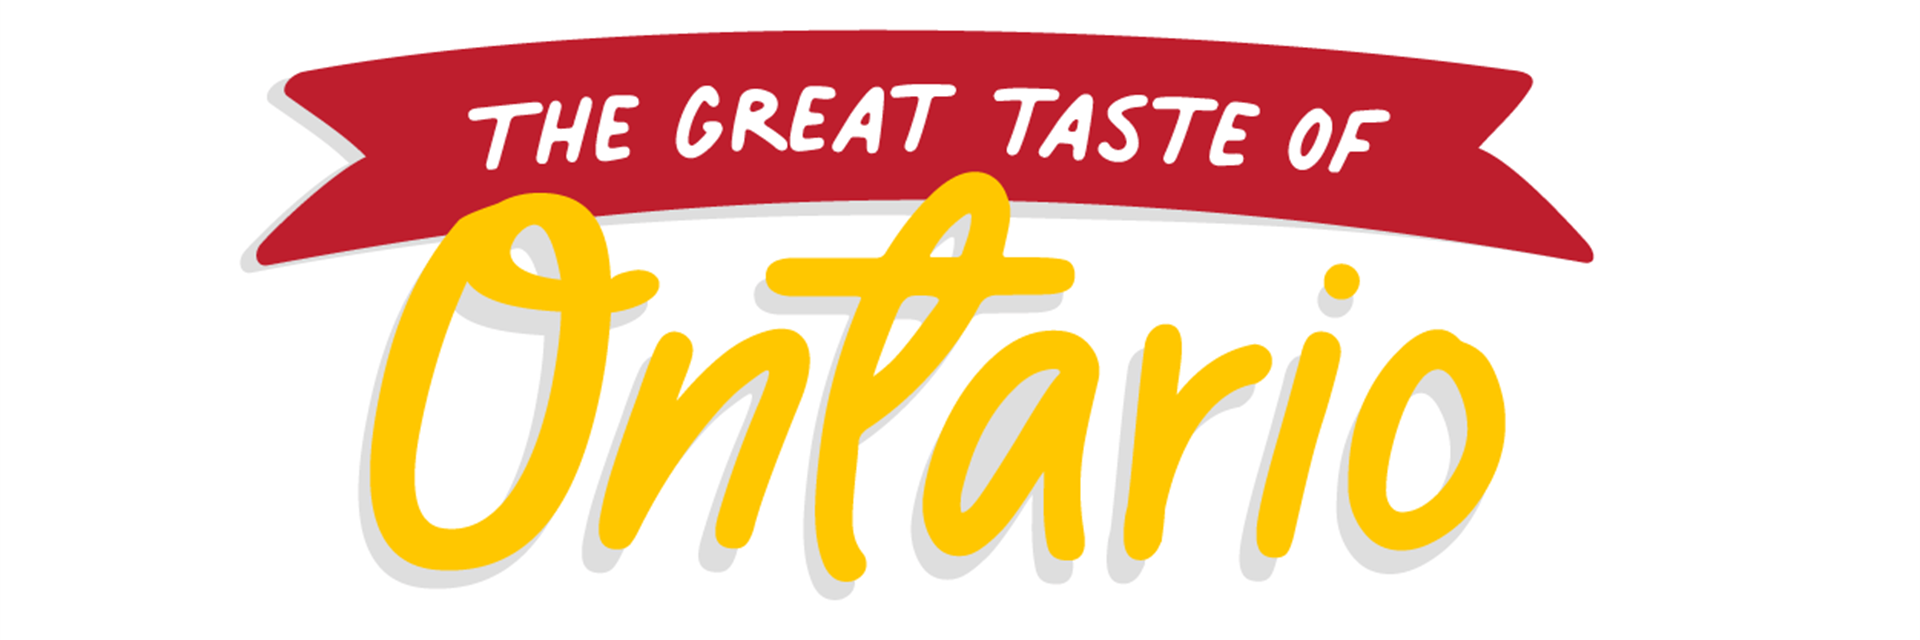 great taste of ontario logo